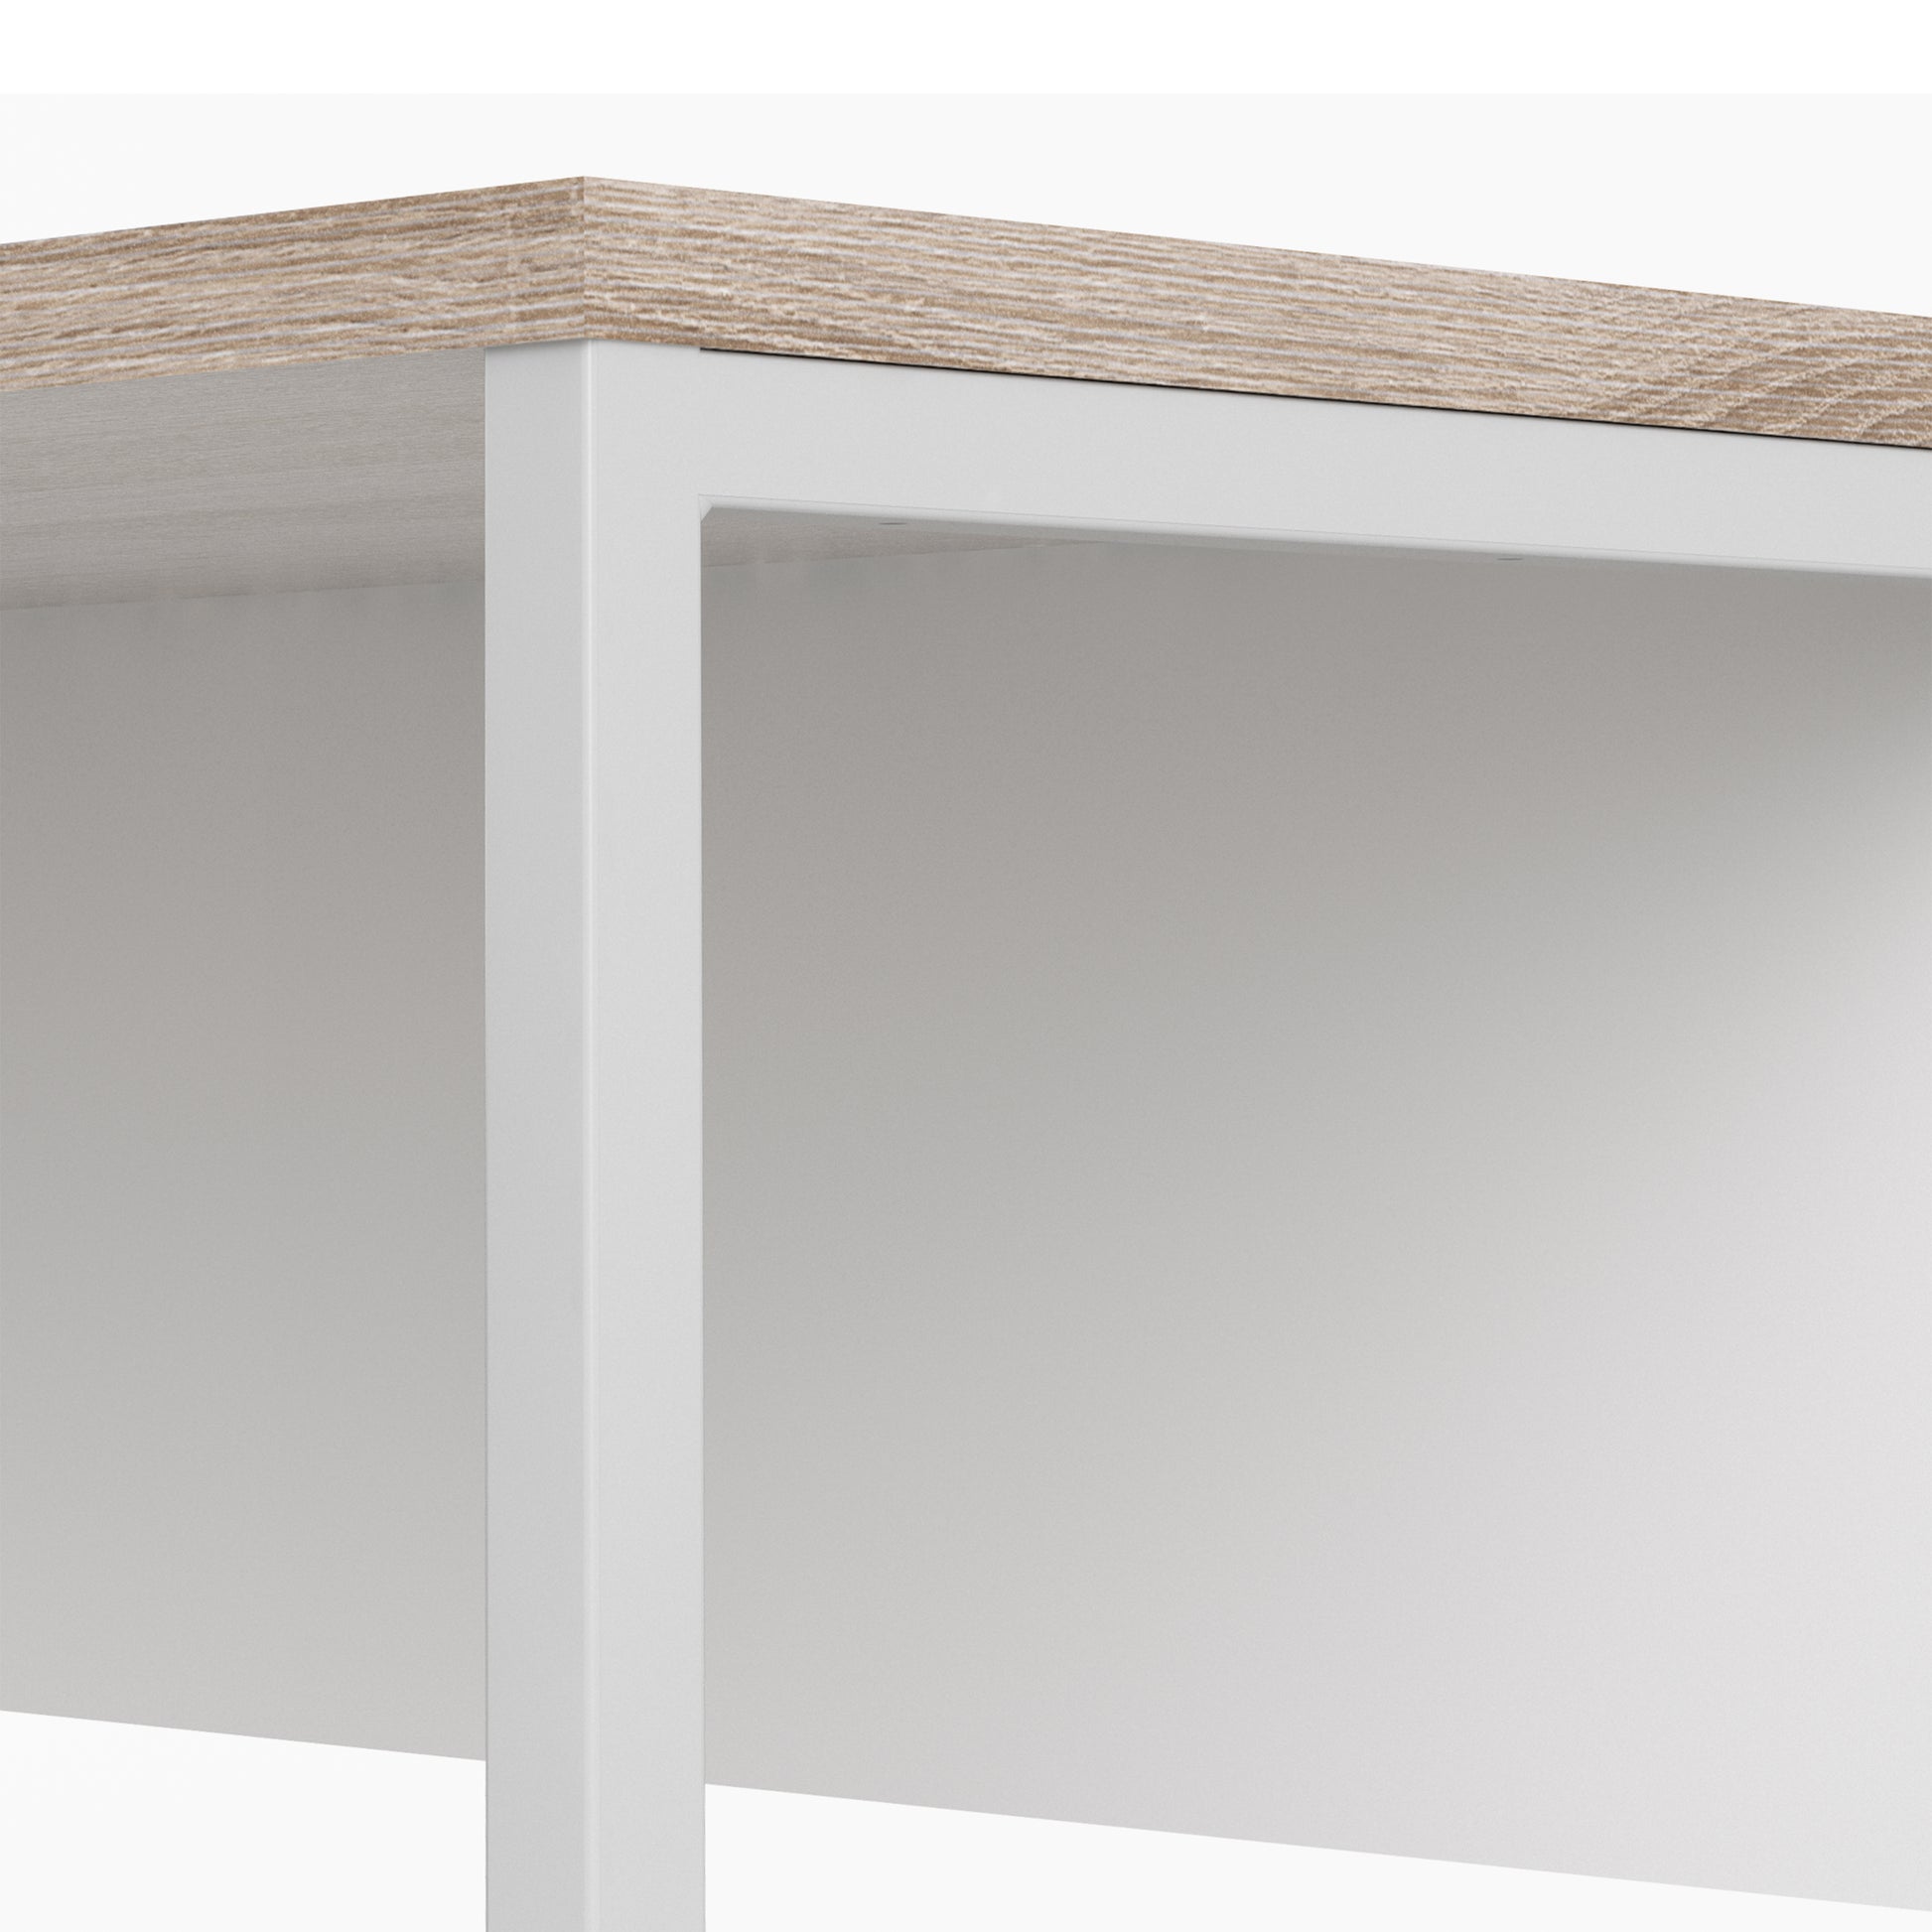 Function Plus  Corner Desk 2 Drawers in White and Truffle Oak